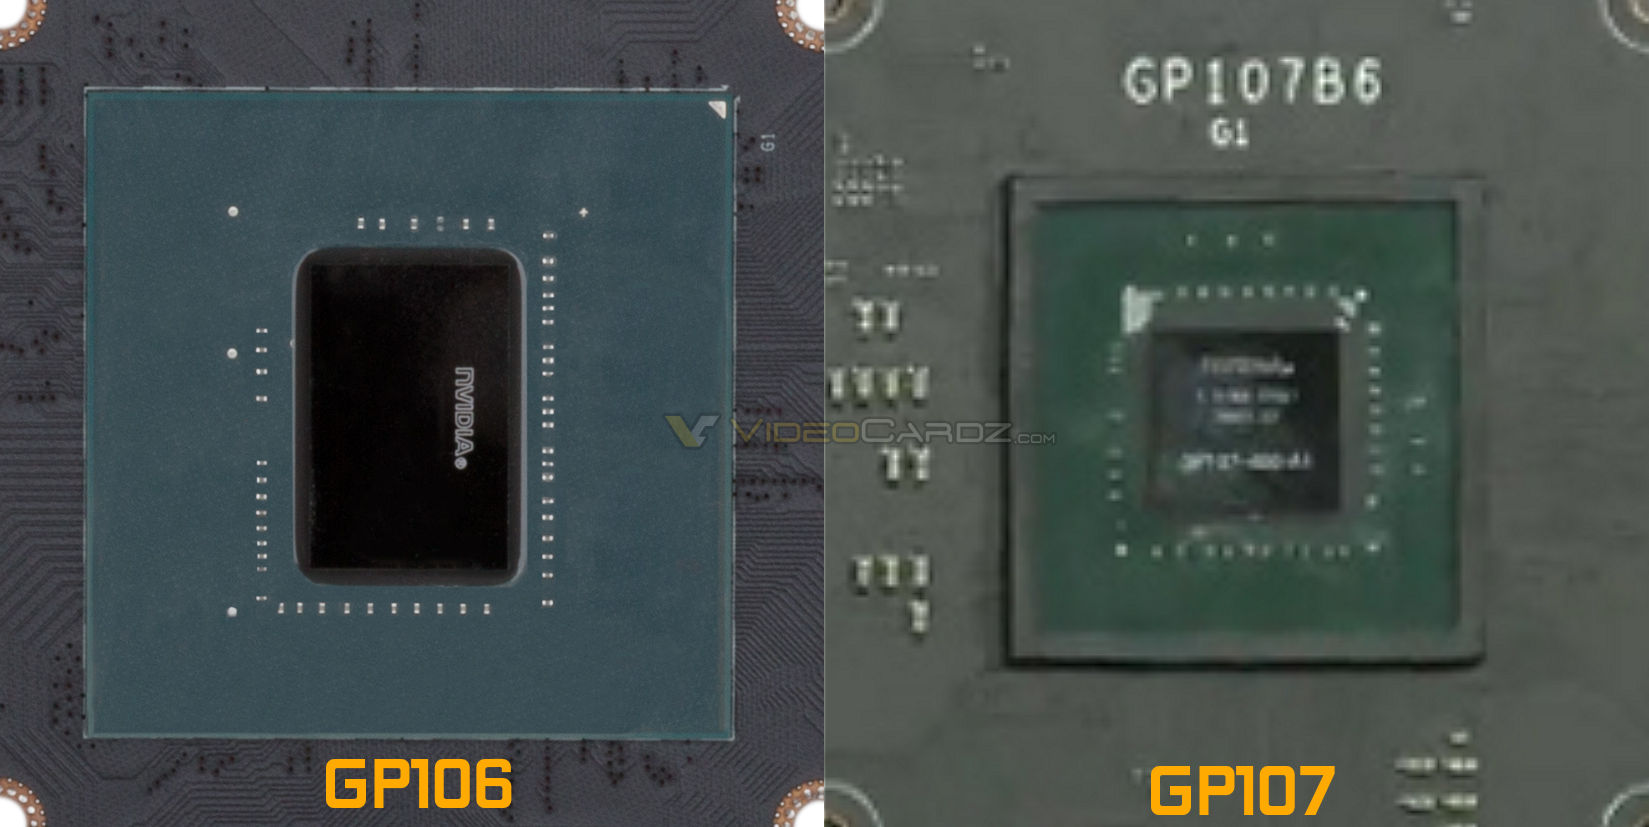 GeForce GTX 1050 Ti GP107 GPU pictured | VideoCardz.com